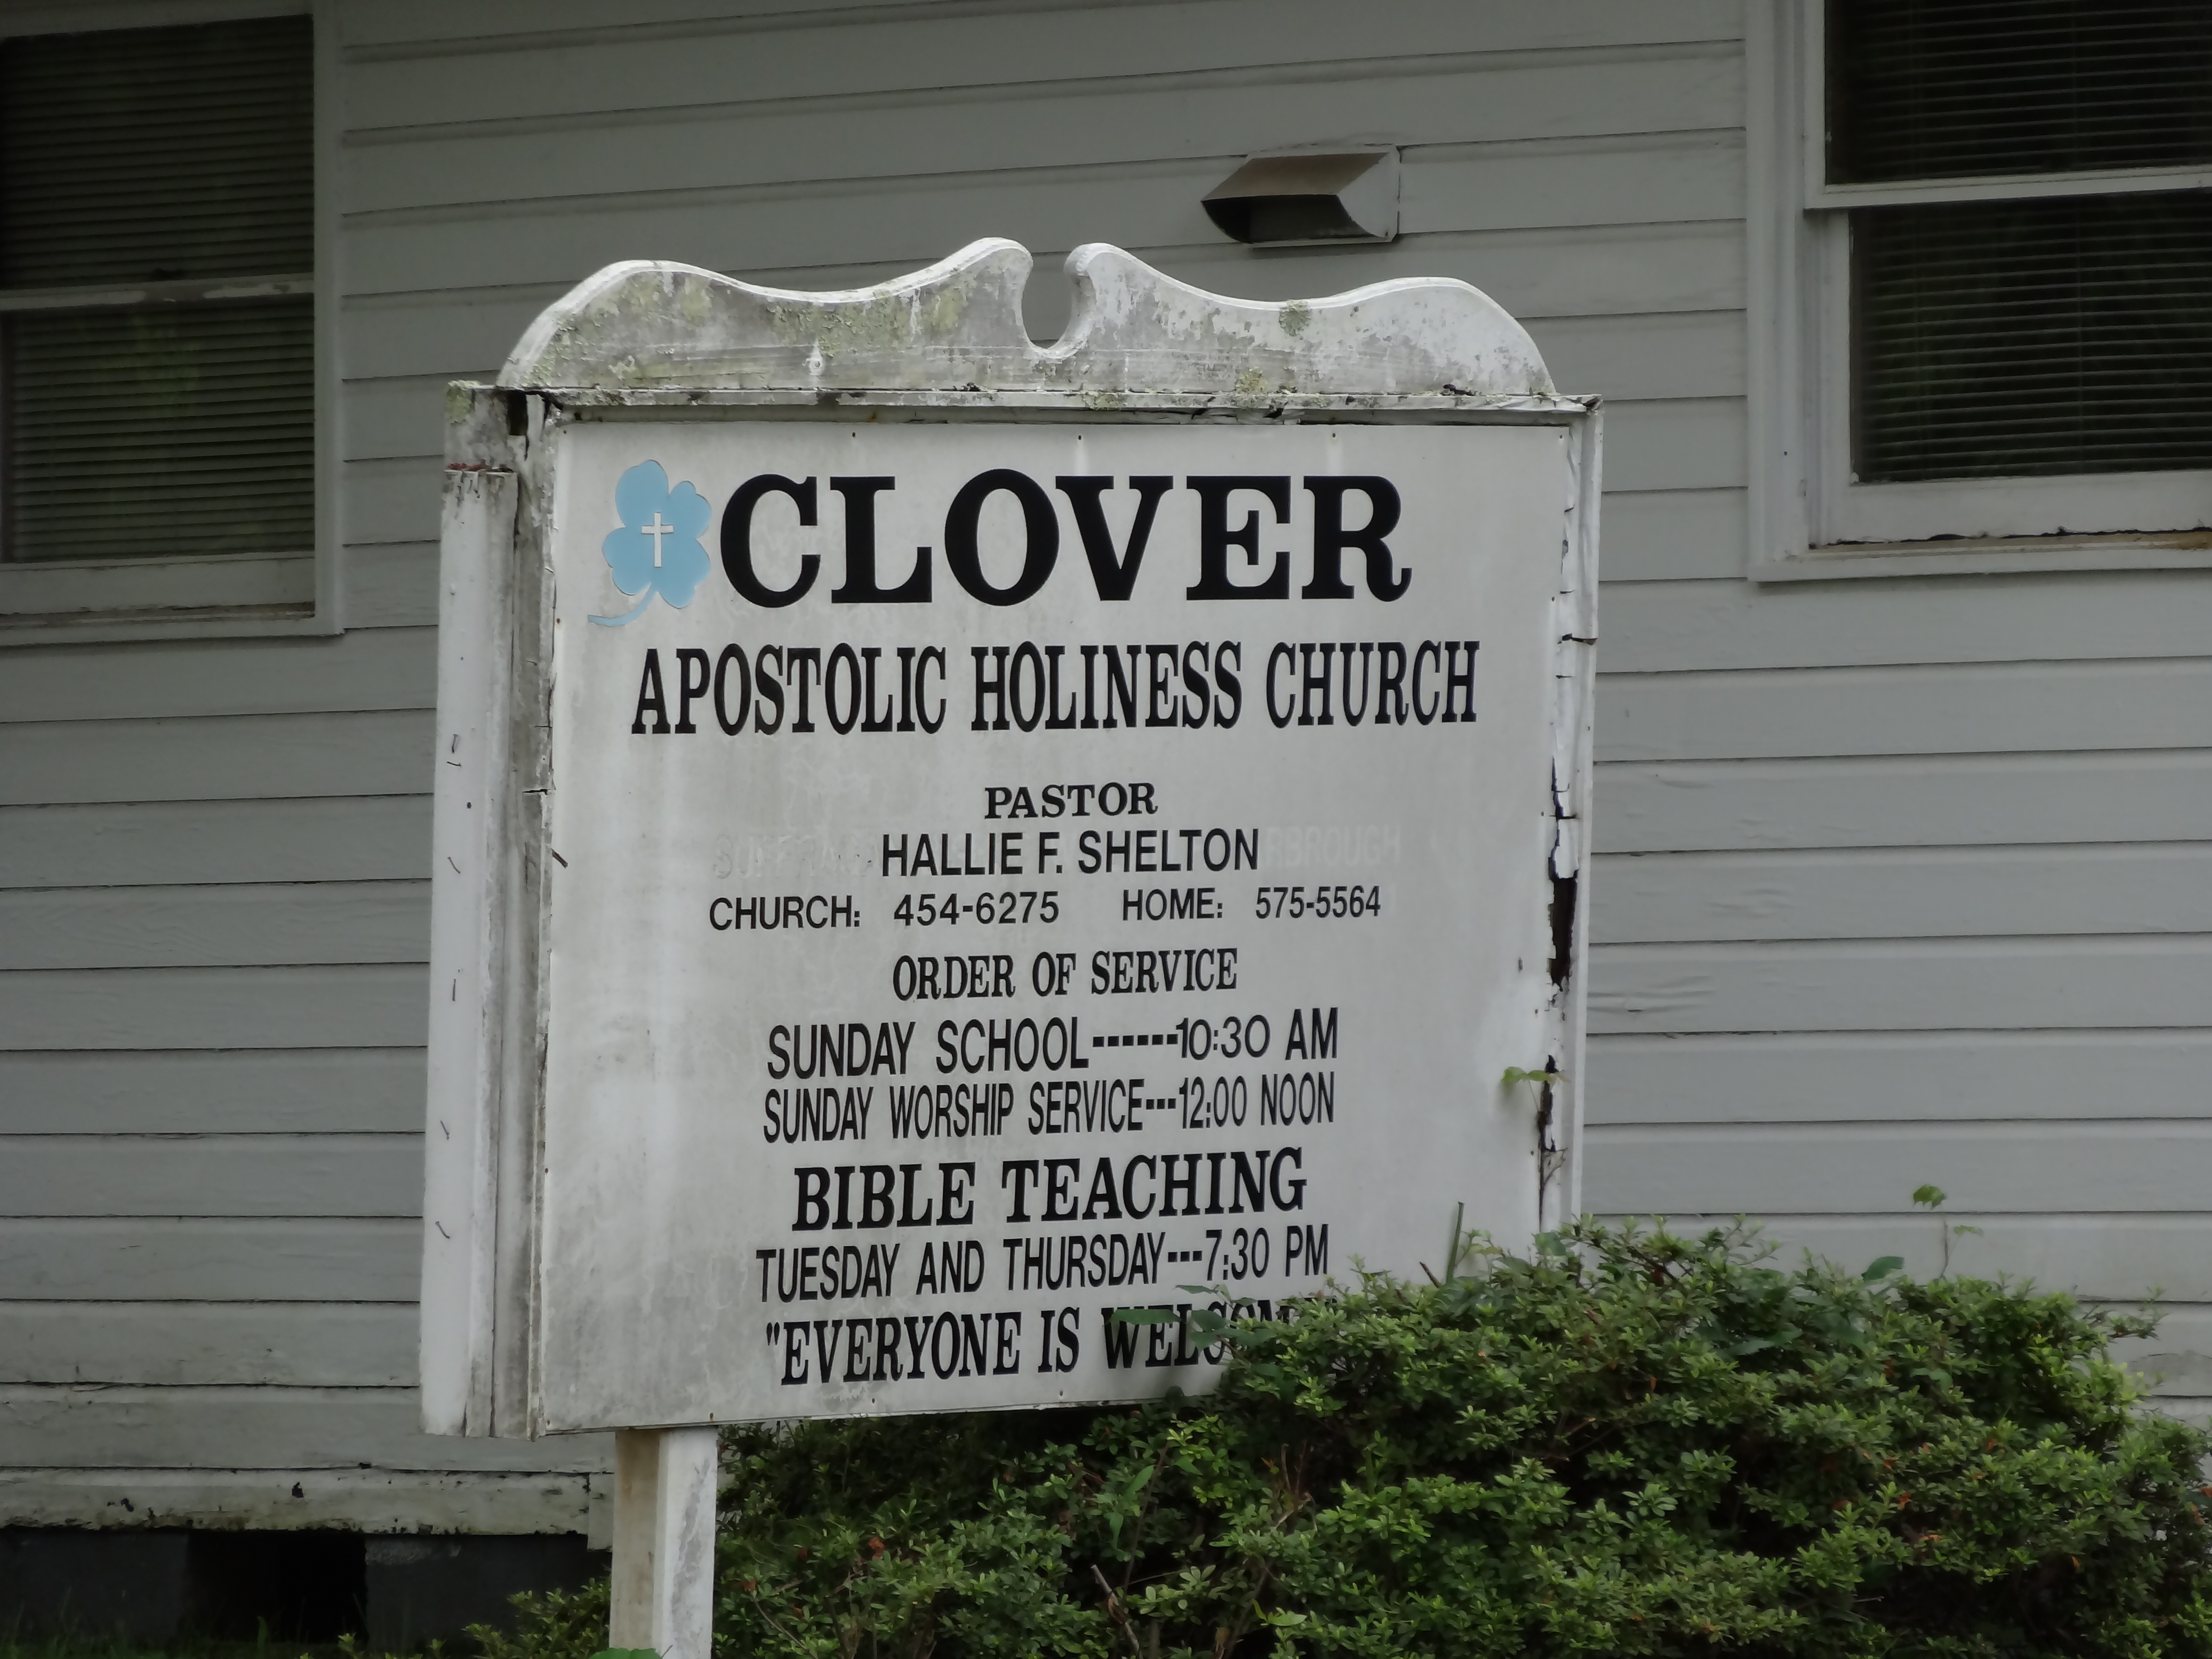 File:Clover.jpg - Wikipedia